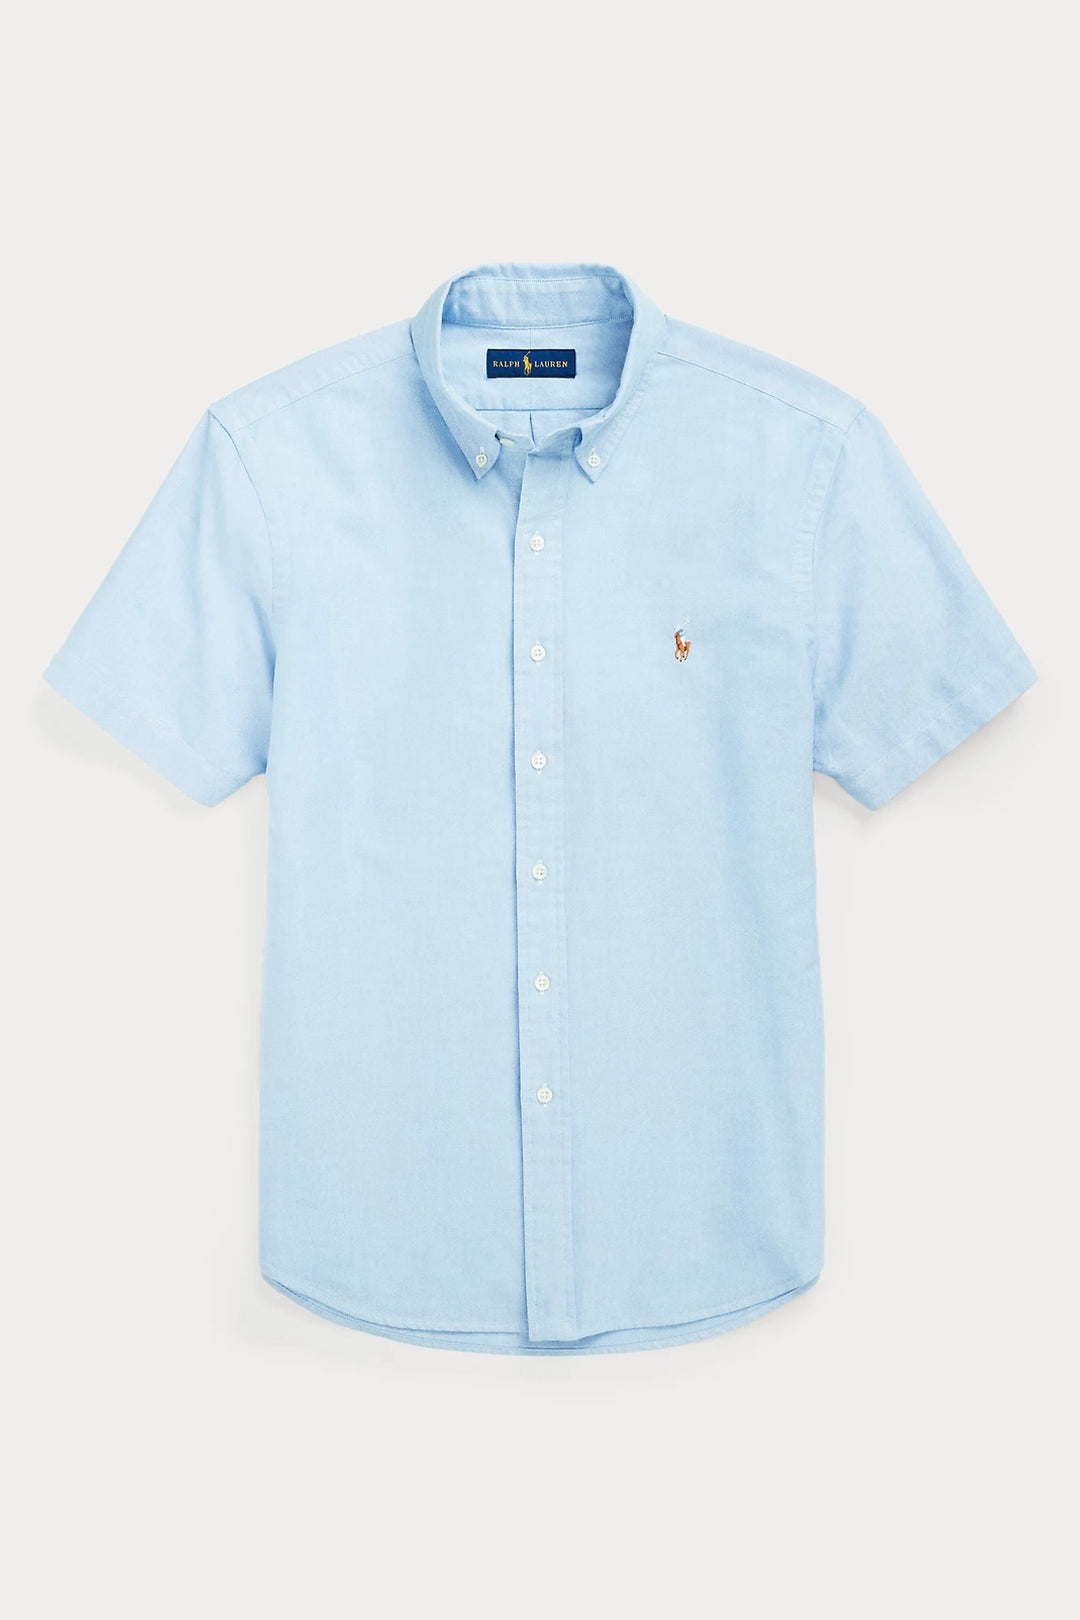 POLO RALPH LAUREN - Custom Fit Oxford Shirt Blue - Dale